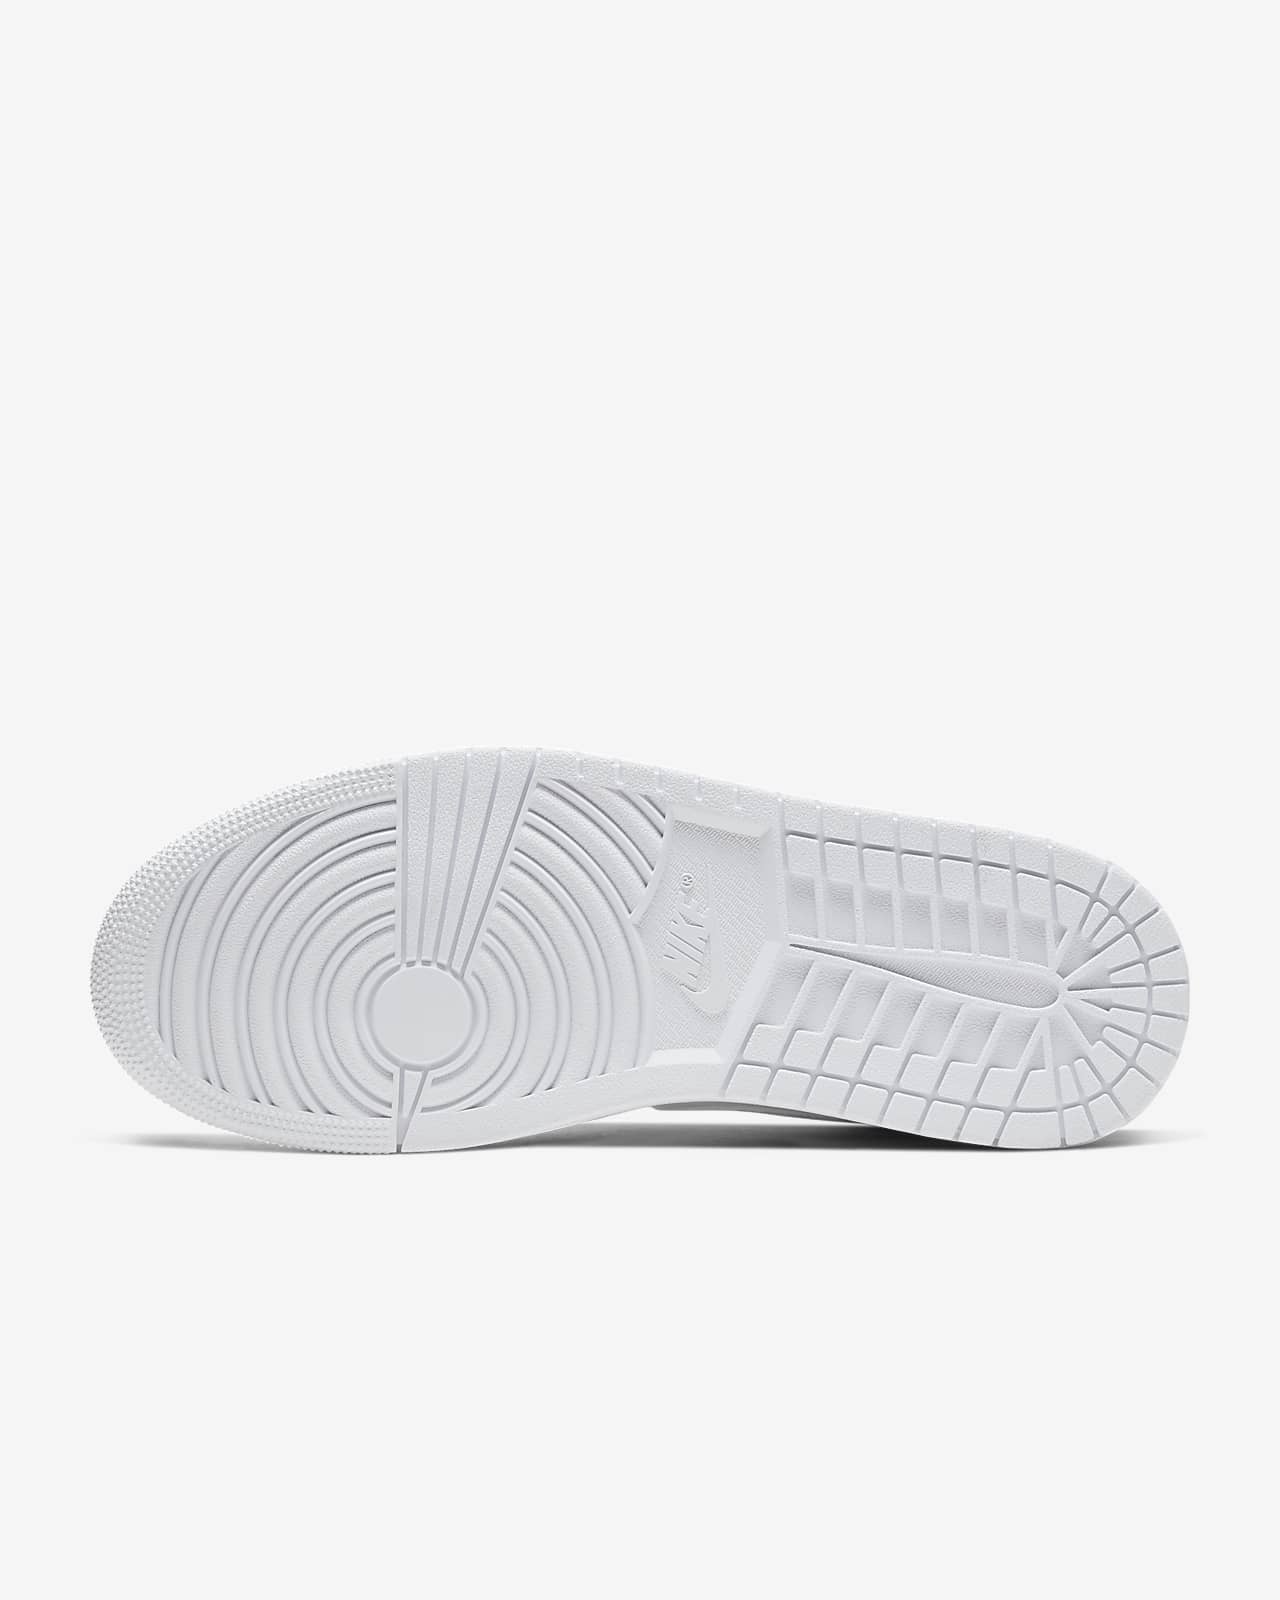 Air Jordan 1 Mid Shoes. Nike SA